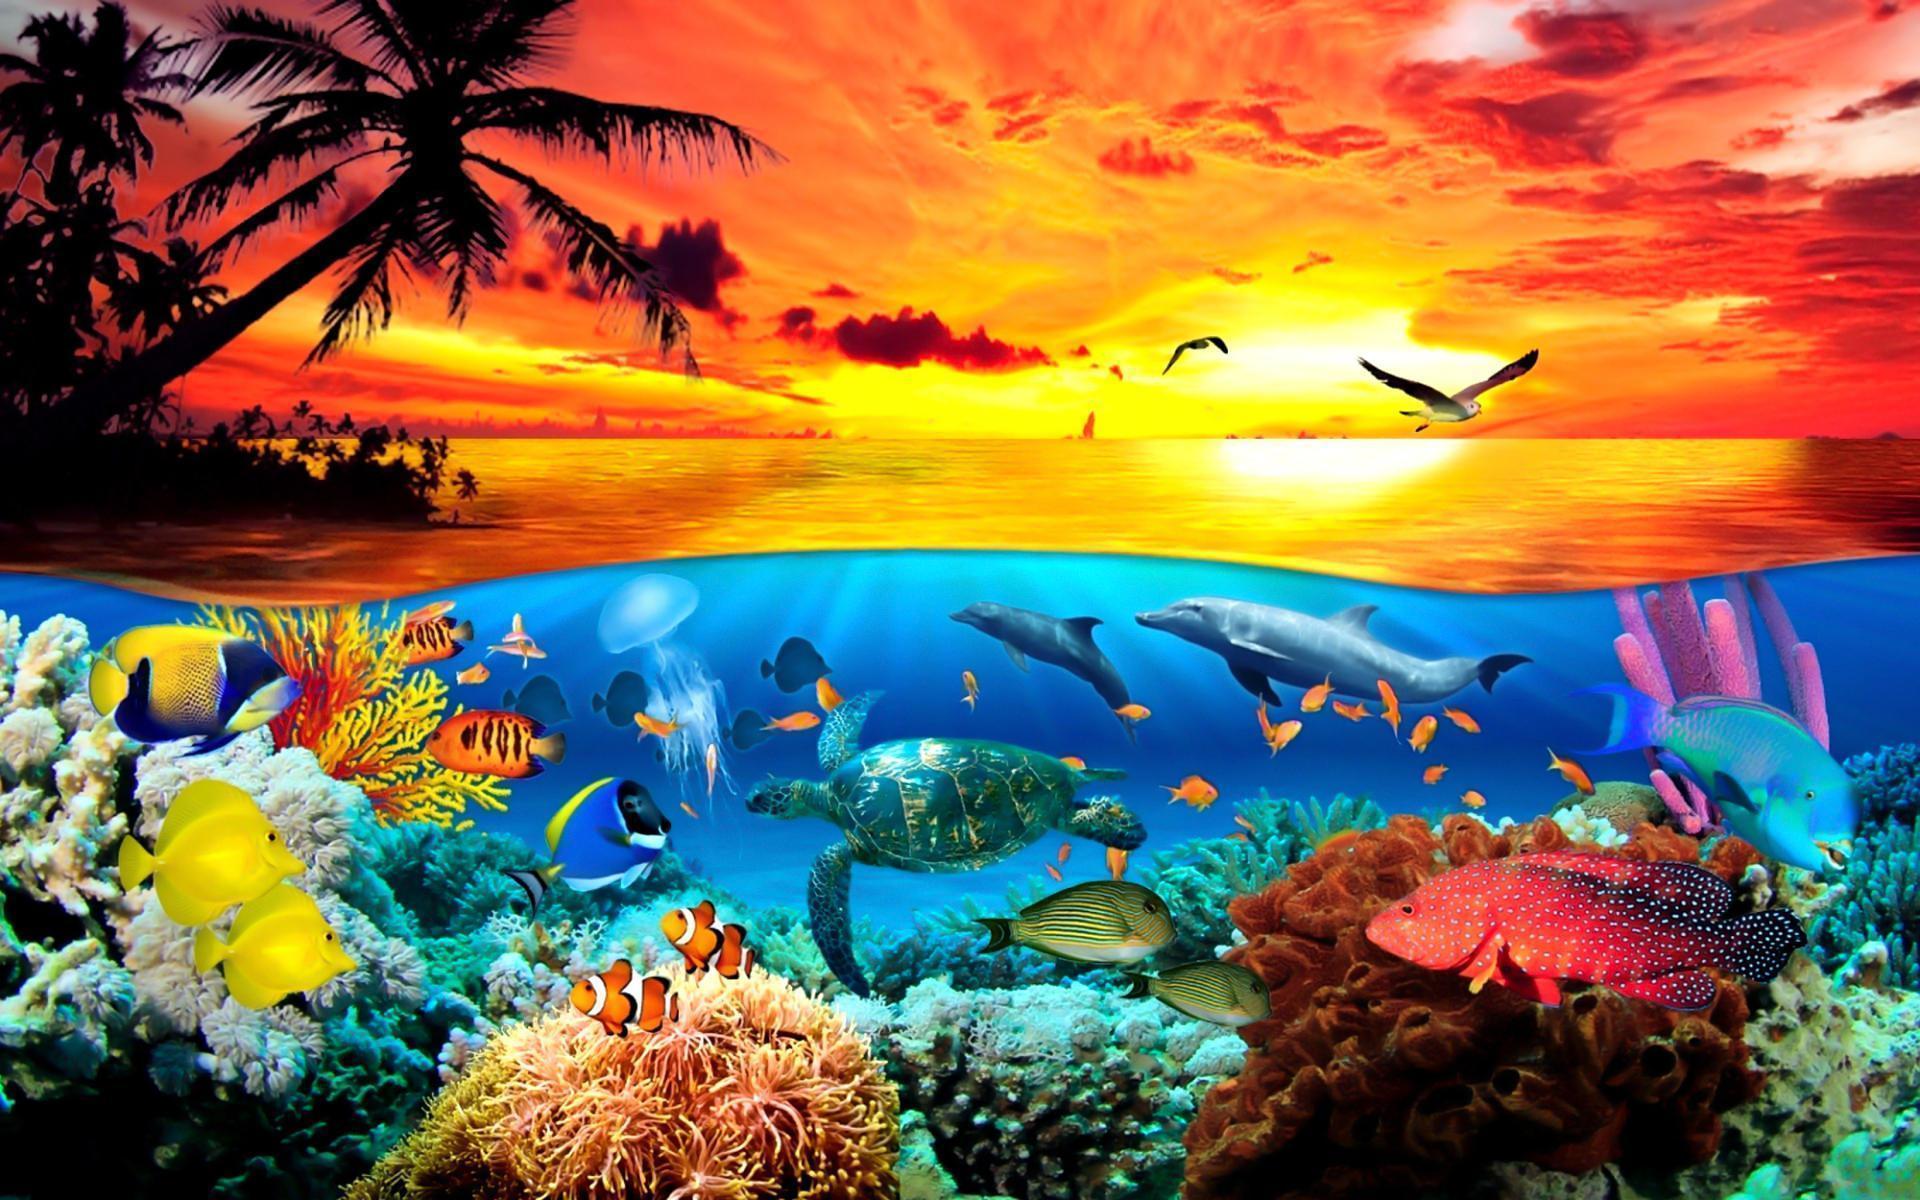 Wallpaper ID 581148  sea monsters fantasy art creature deep sea  underwater 1080P free download